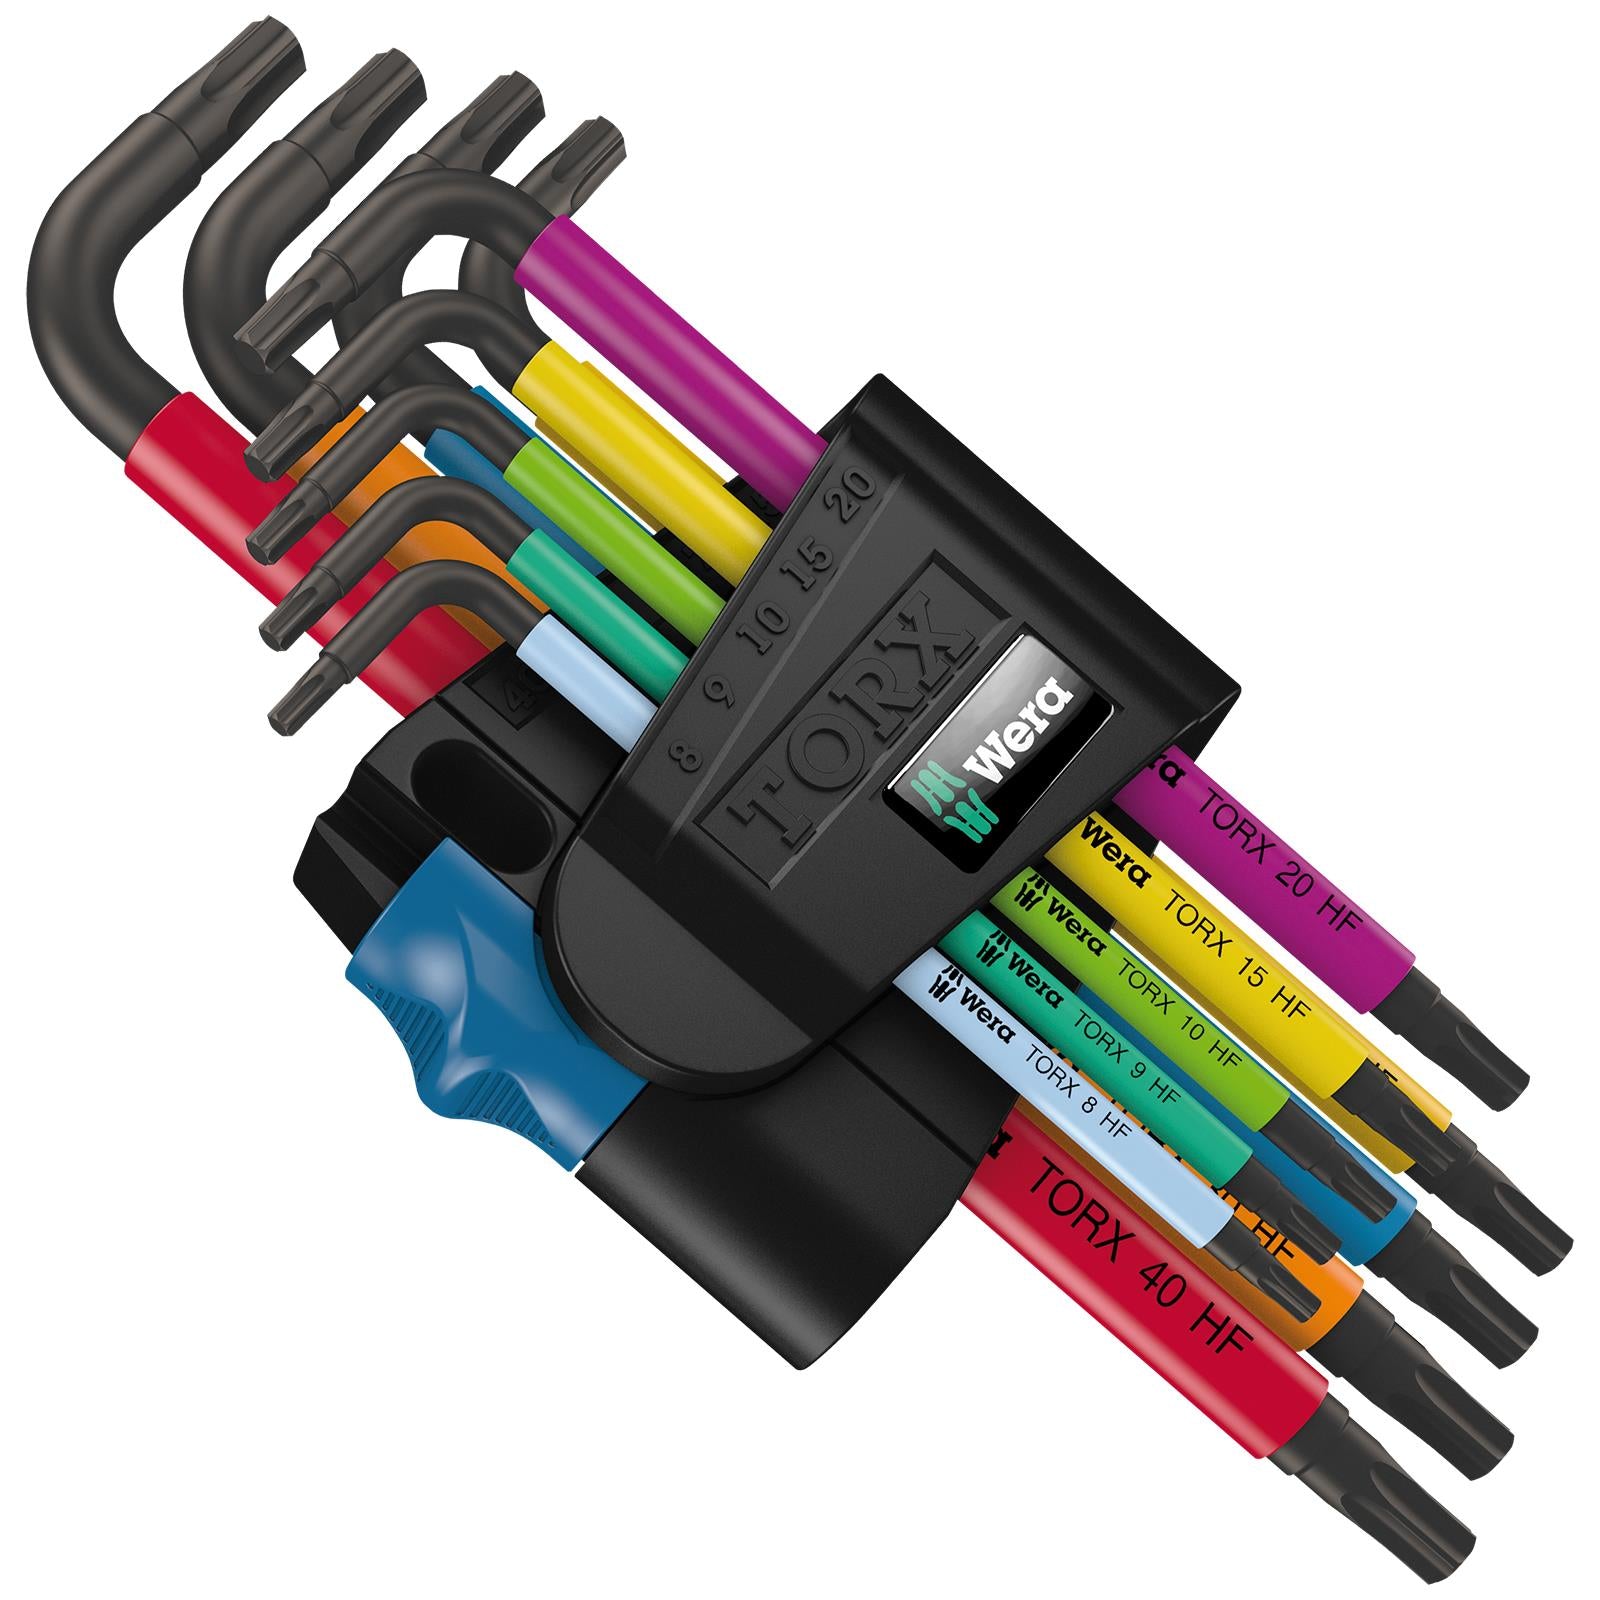 Wera Torx Key Multicolour HF 1 967/9 L Key Set with Holding Function 9 Piece T8-T40